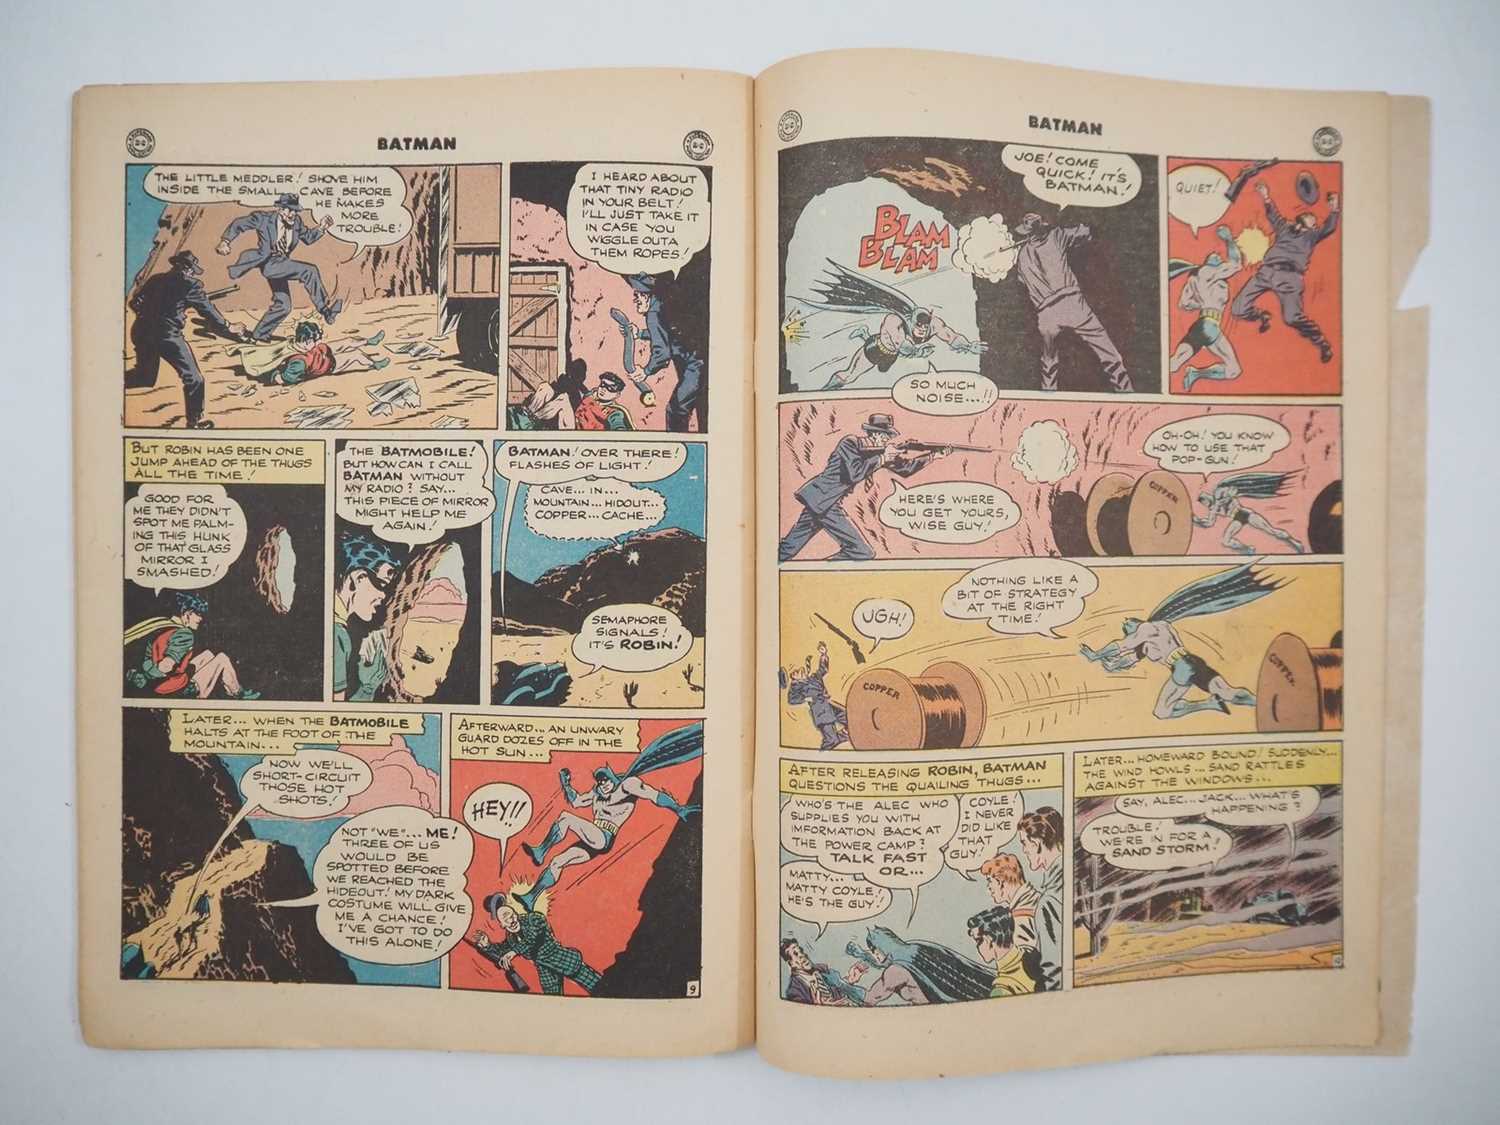 BATMAN #25 (1944 - DC) - First time that two major Batman villains (Joker and Penguin) team-up - - Image 27 of 37